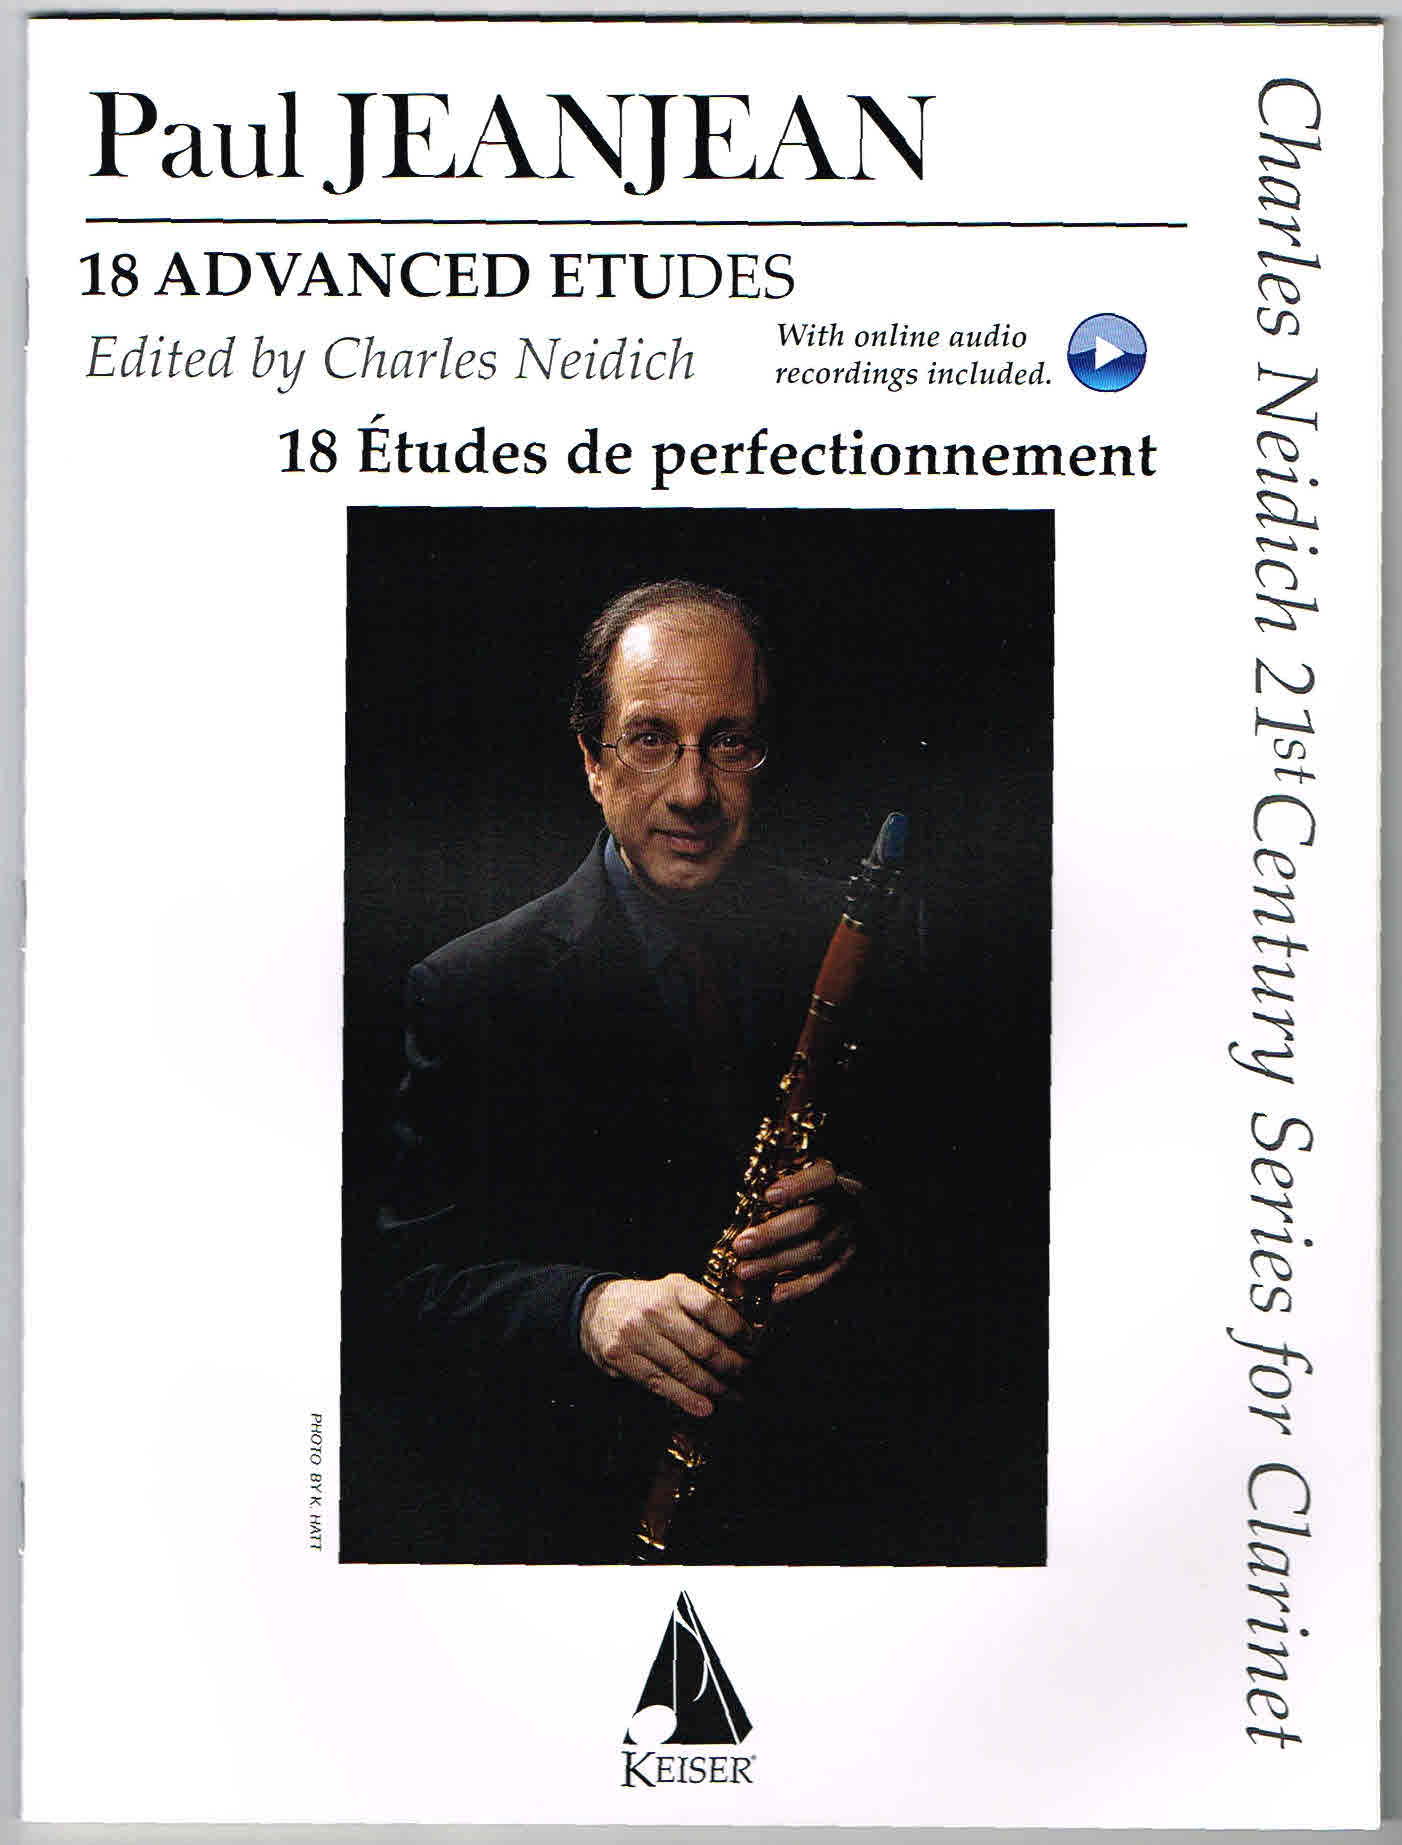 Paul Jean Jean - 18 studi avanzati per clarinetto di Charles Neidich (HL00042385) - Foto 1 di 1